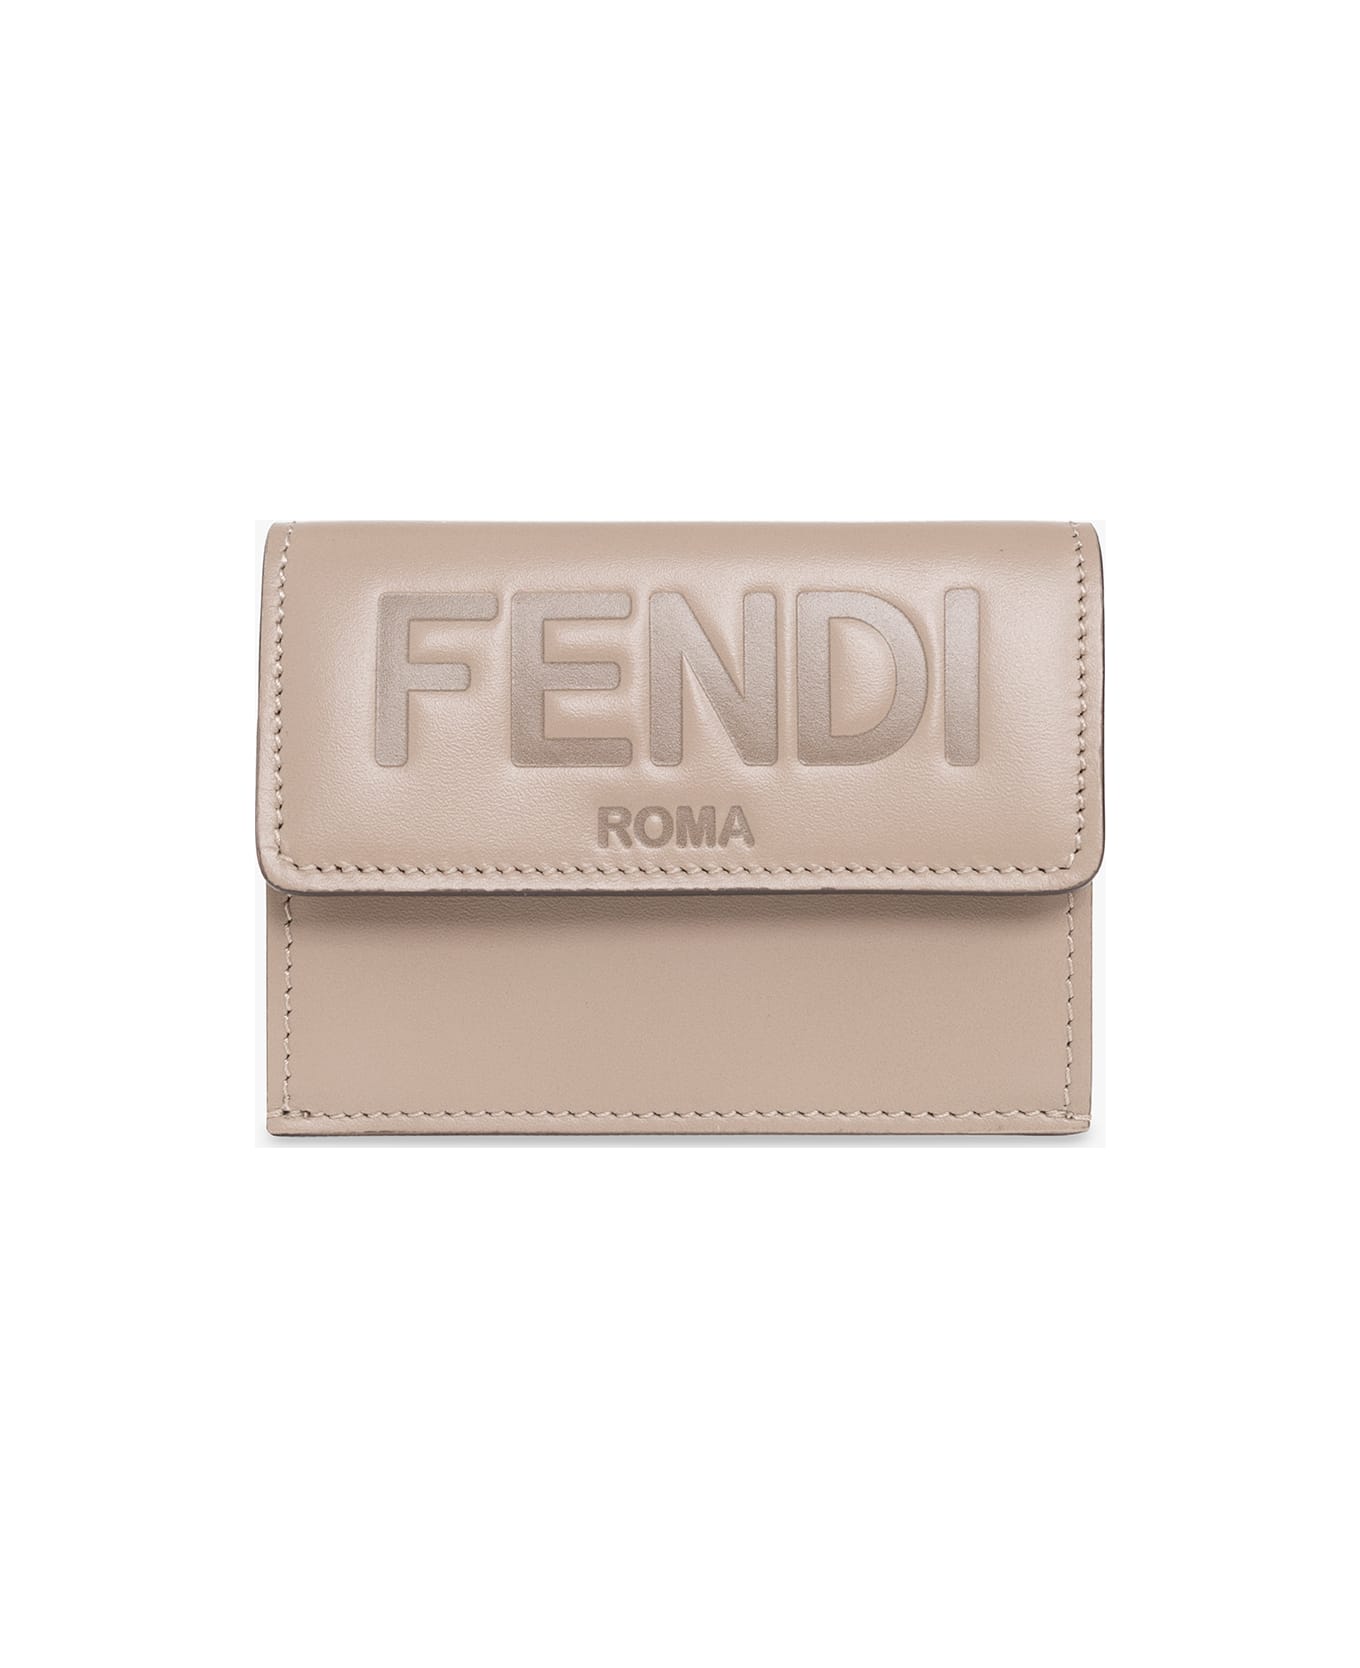 Fendi Micro Trifold Wallet - Tortora+oro soft